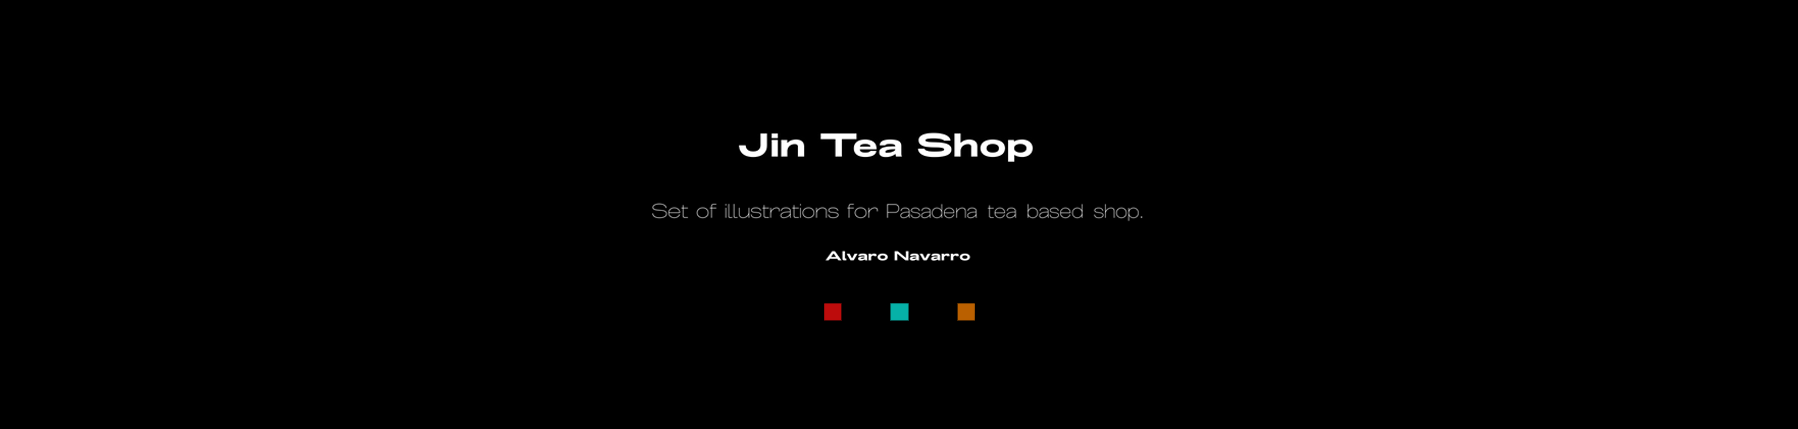 Jin Tea Shop on Behance41f3d479699139.5d2e7e3c4bebb.png